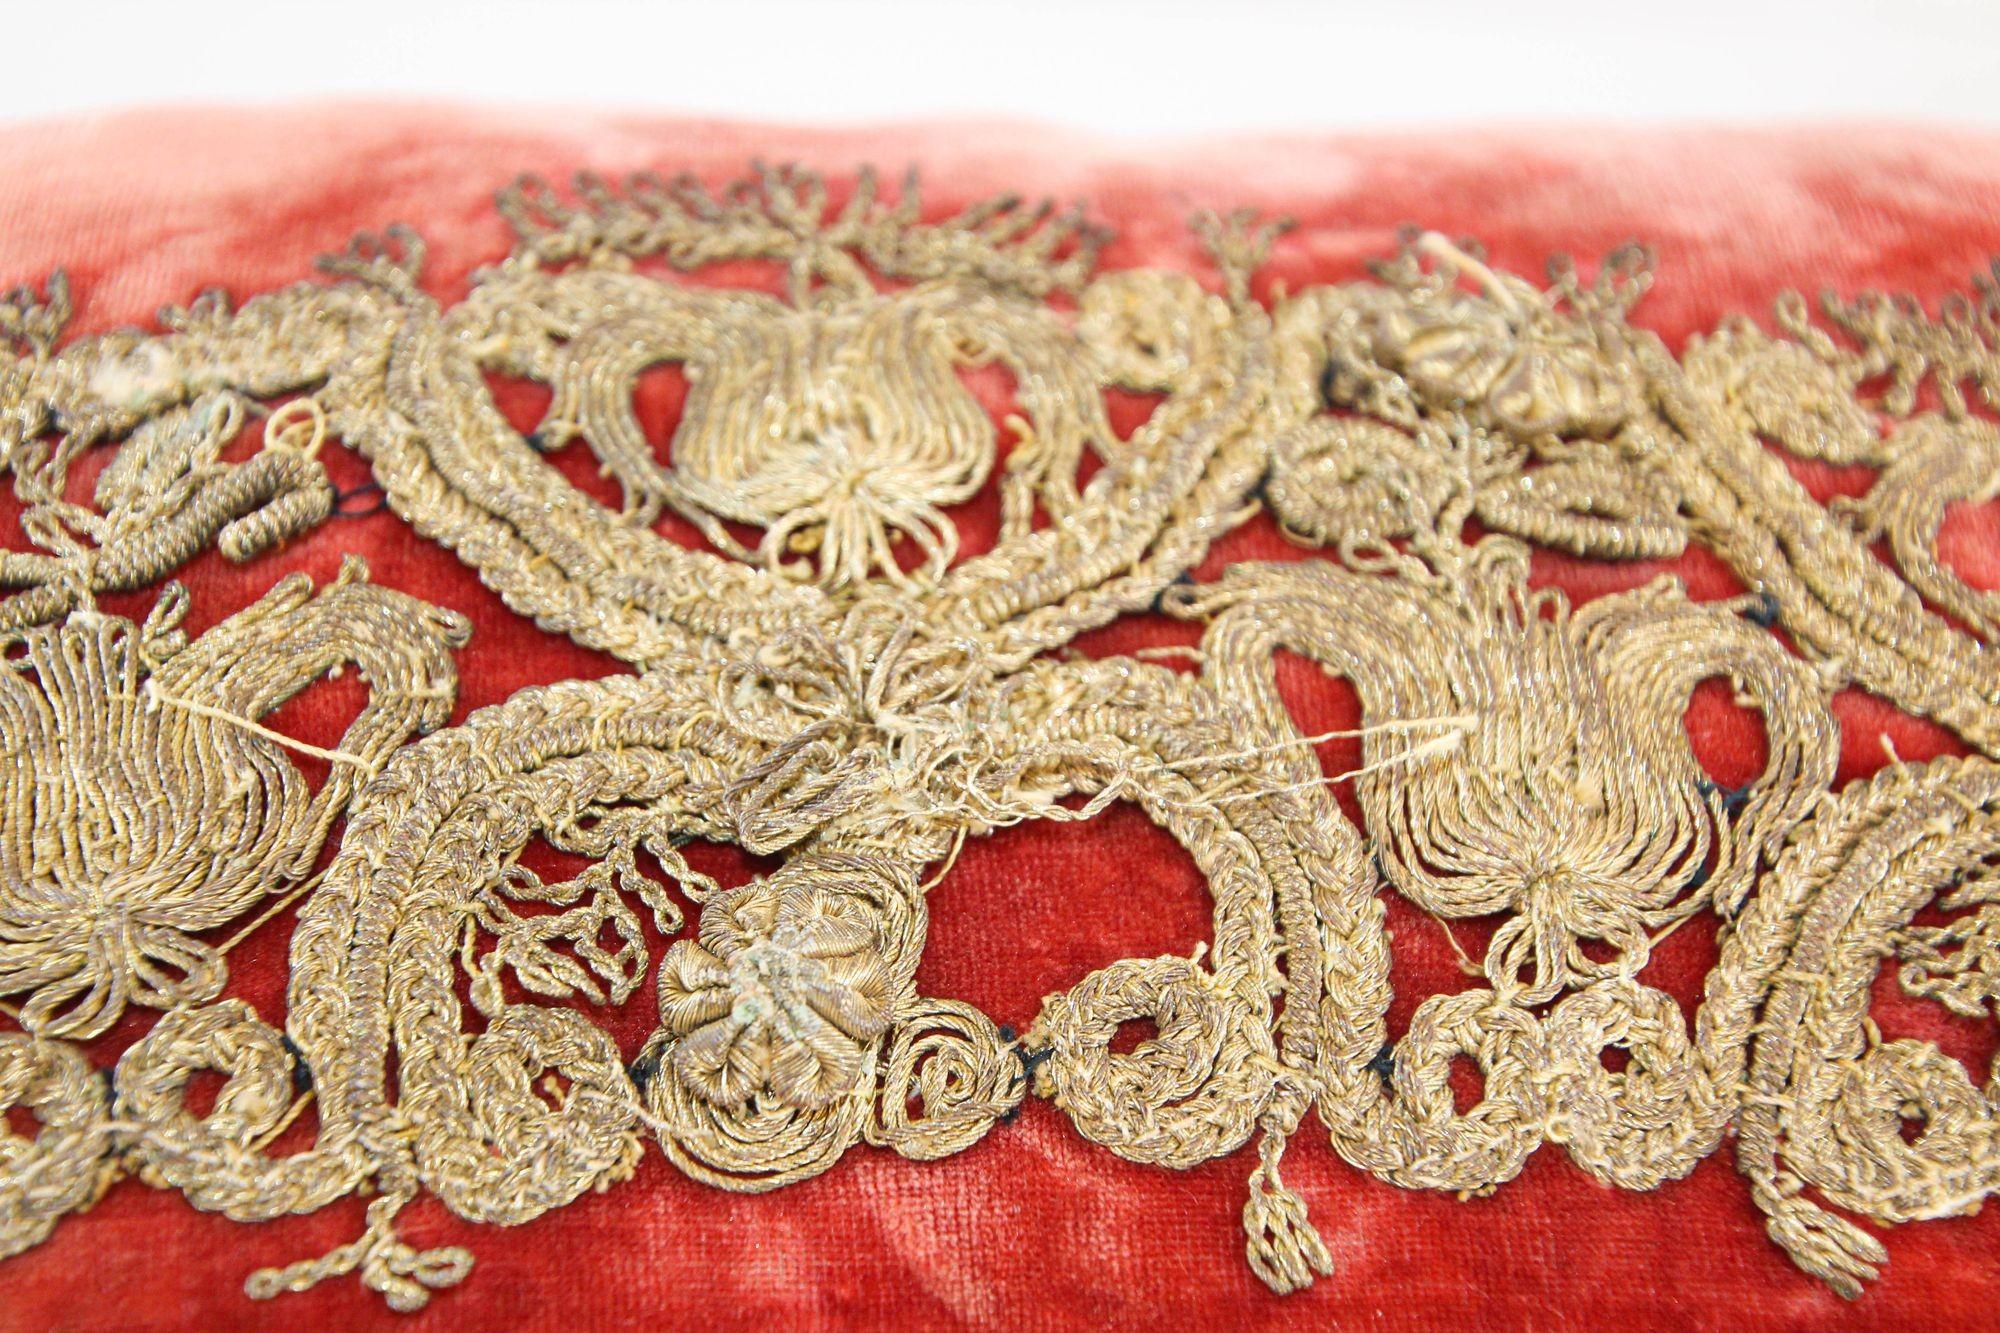 Hand-Crafted Antique Venetian Moorish Silk Velvet Throw Pillows Embellished Metallic Treads For Sale